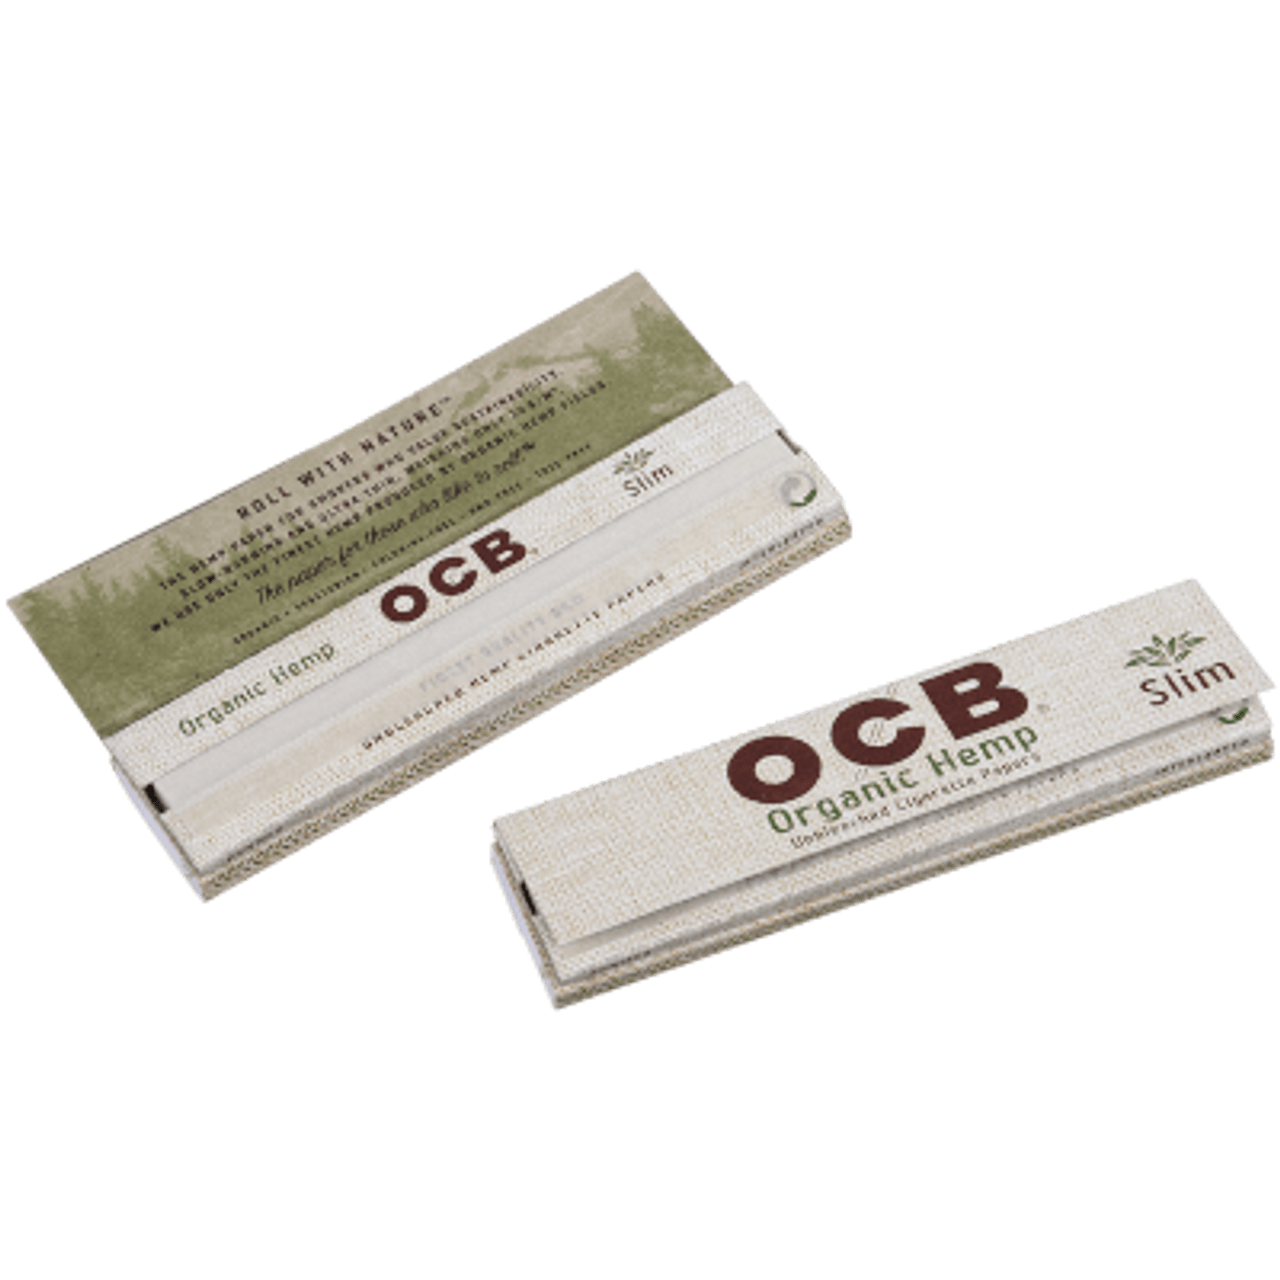 OCB Organic Hemp Rolling Papers King Size Slim Plus Tips 24/32 Ct